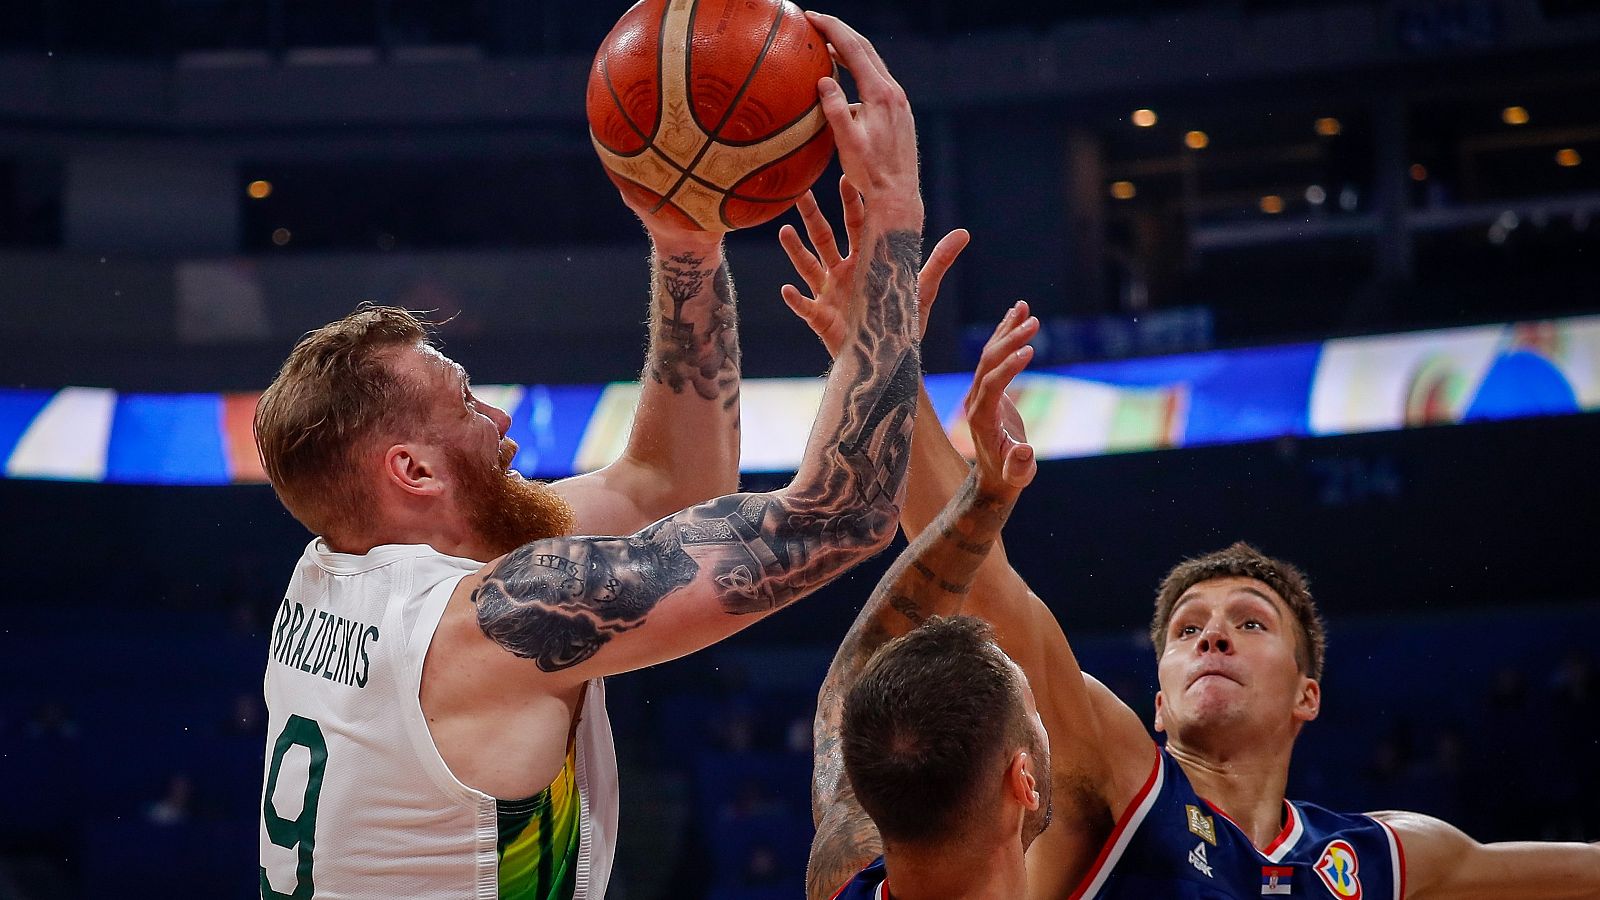 Lituania - Serbia, cuartos de final del Mundial de baloncesto 2023